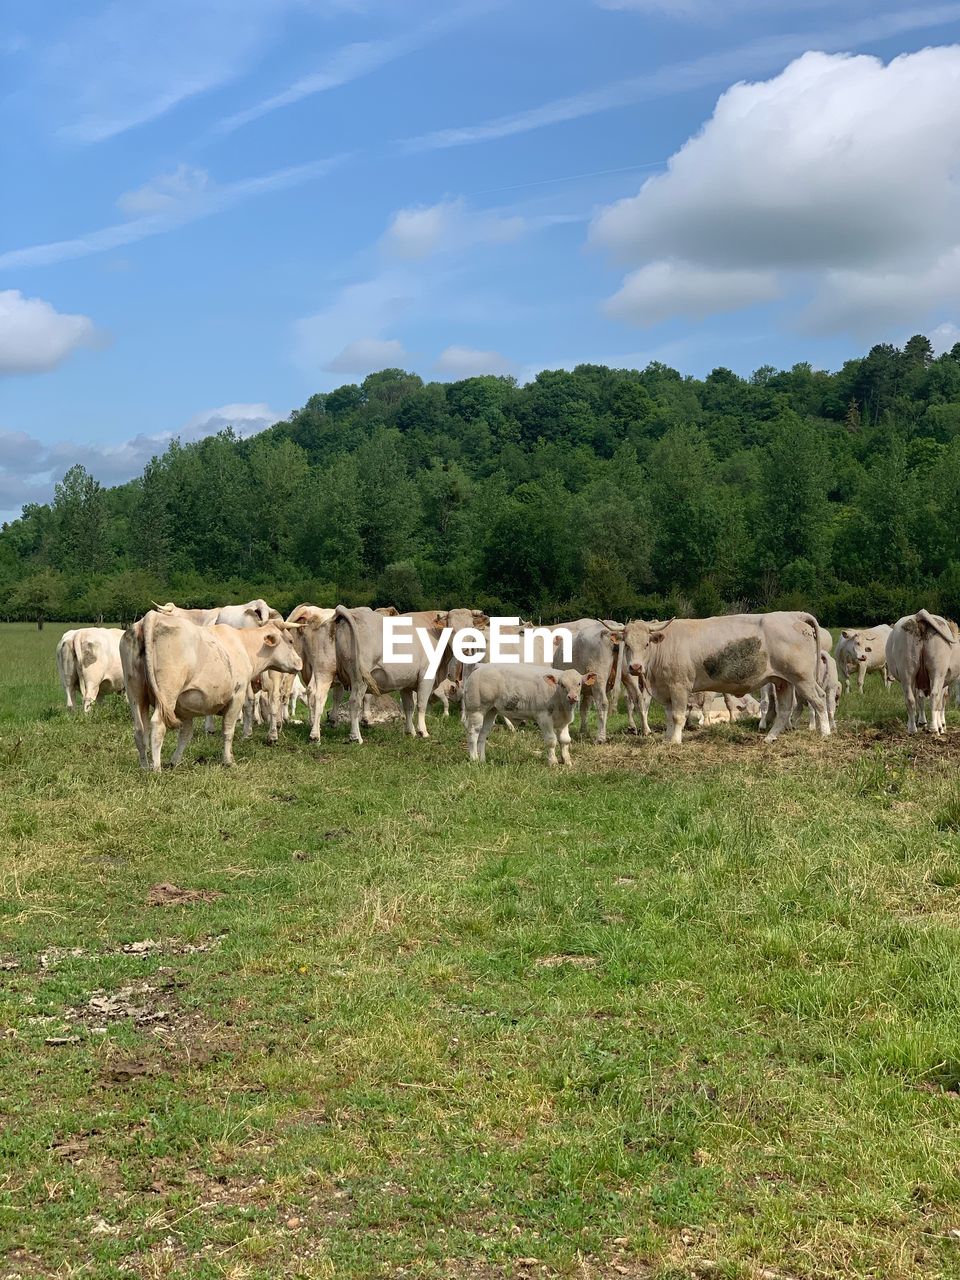 COWS ON GRASSY FIELD